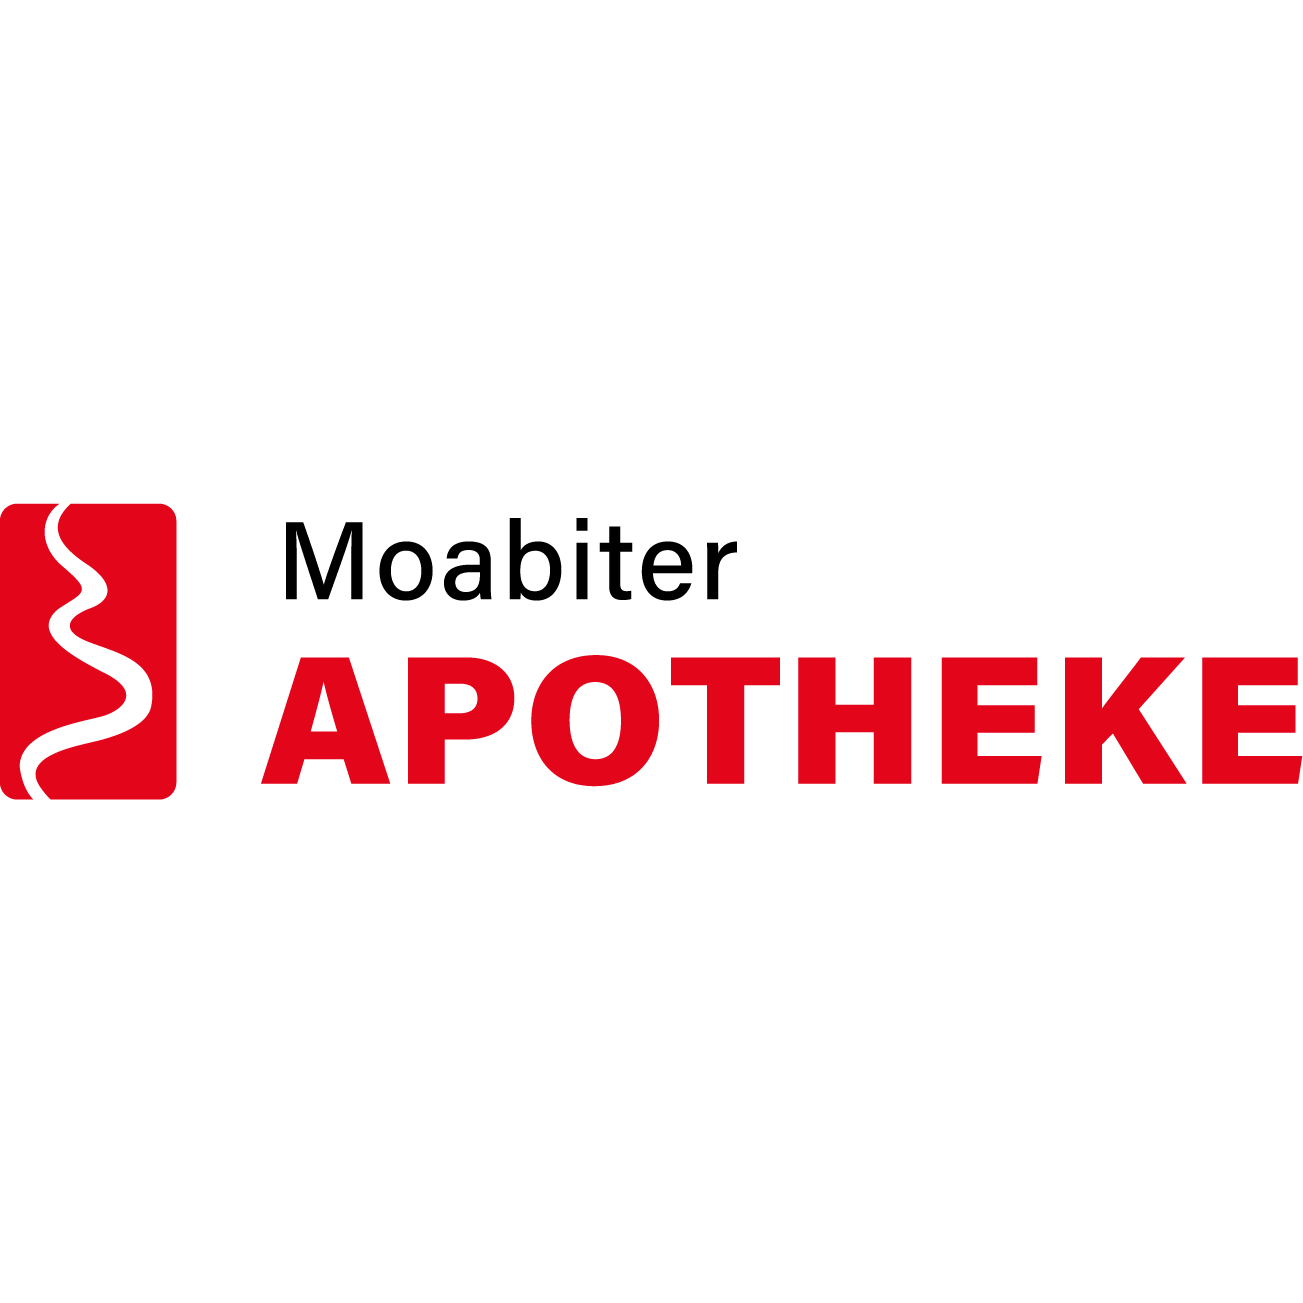 Moabiter Apotheke in Berlin - Logo